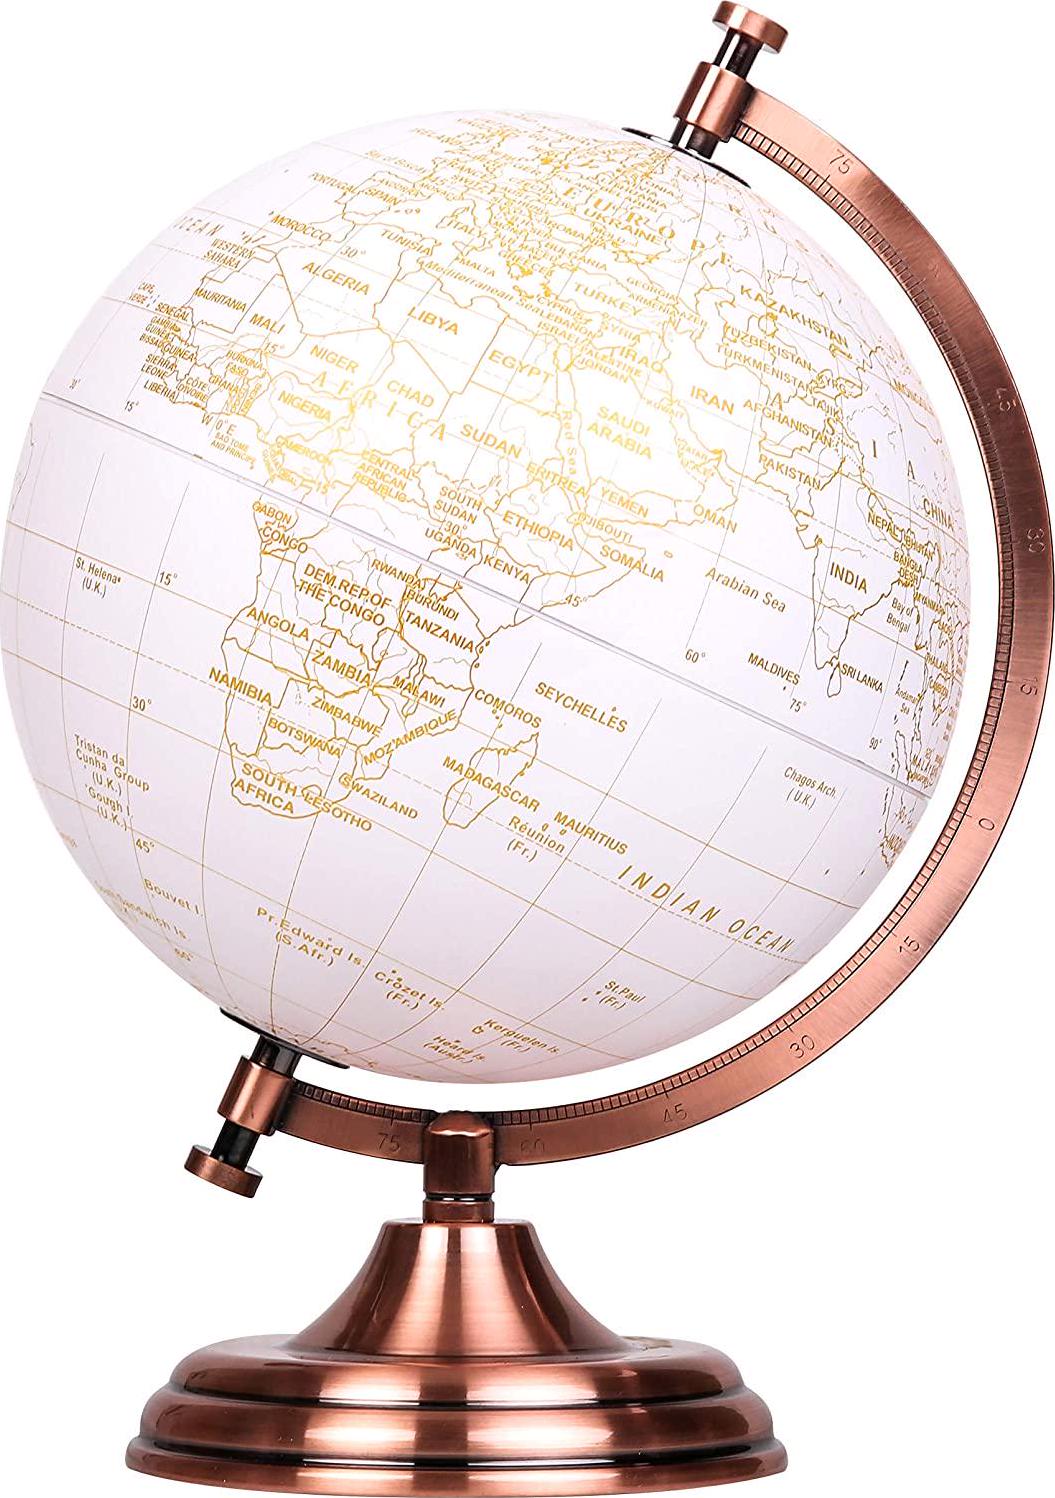 Exerz, Exerz World Globe (Dia 8 /20 cm) - Educational/Geographic/Modern Desktop Decoration - Metallic Golden World Globe Diameter 20 cm